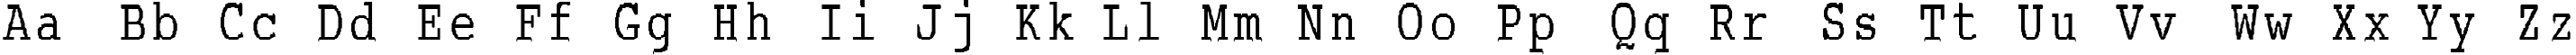 Пример написания английского алфавита шрифтом ABC_TypeWriterRussian